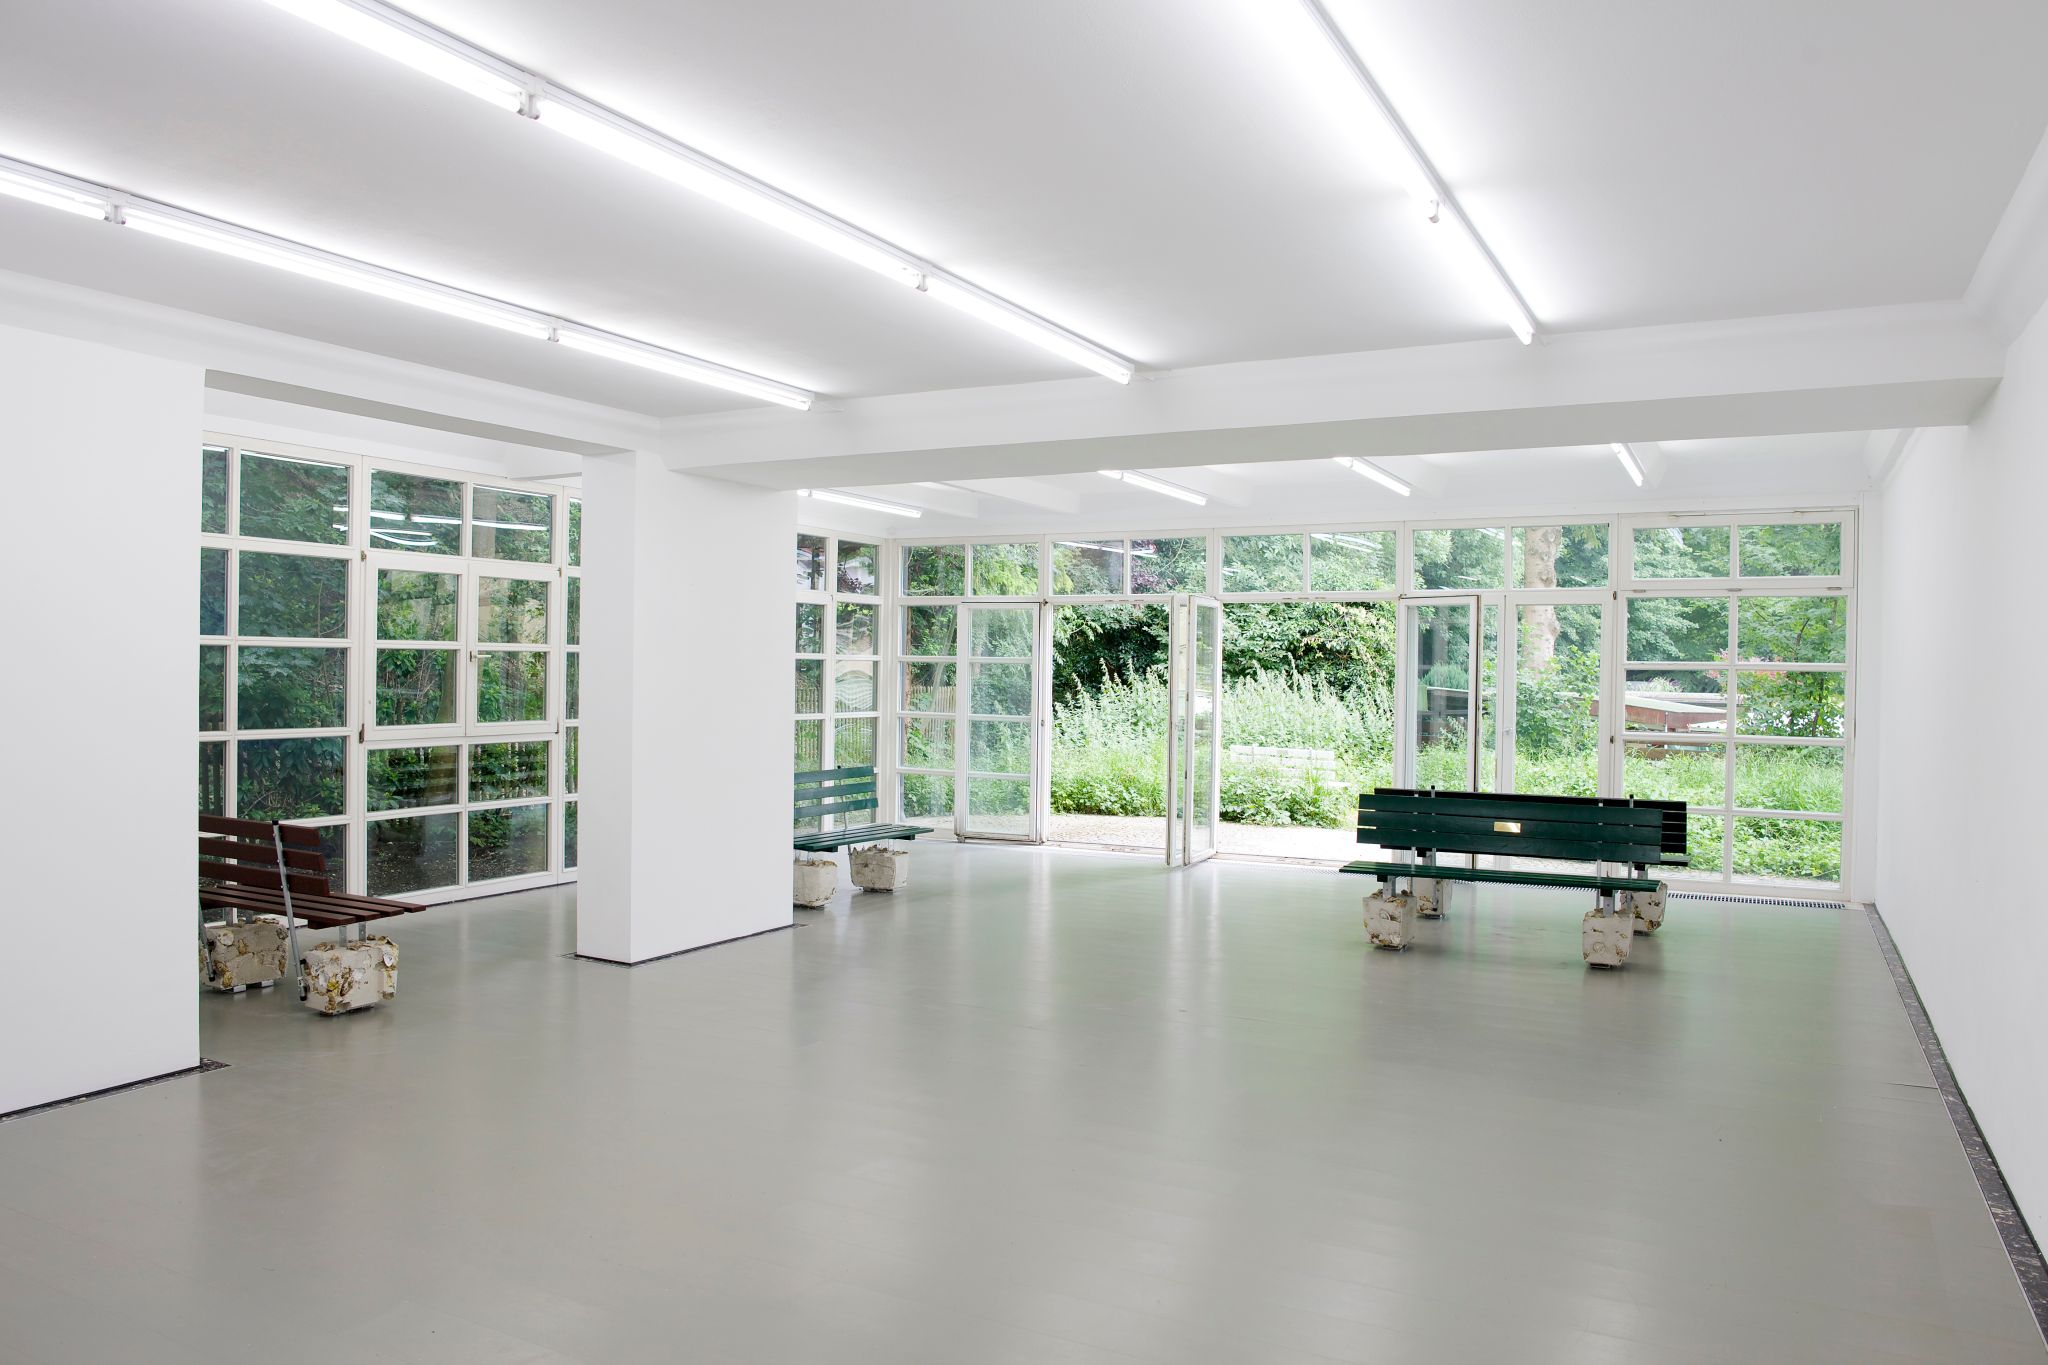 Installation view, Gerry Bibby, Passing Place, Deborah Schamoni, 2014